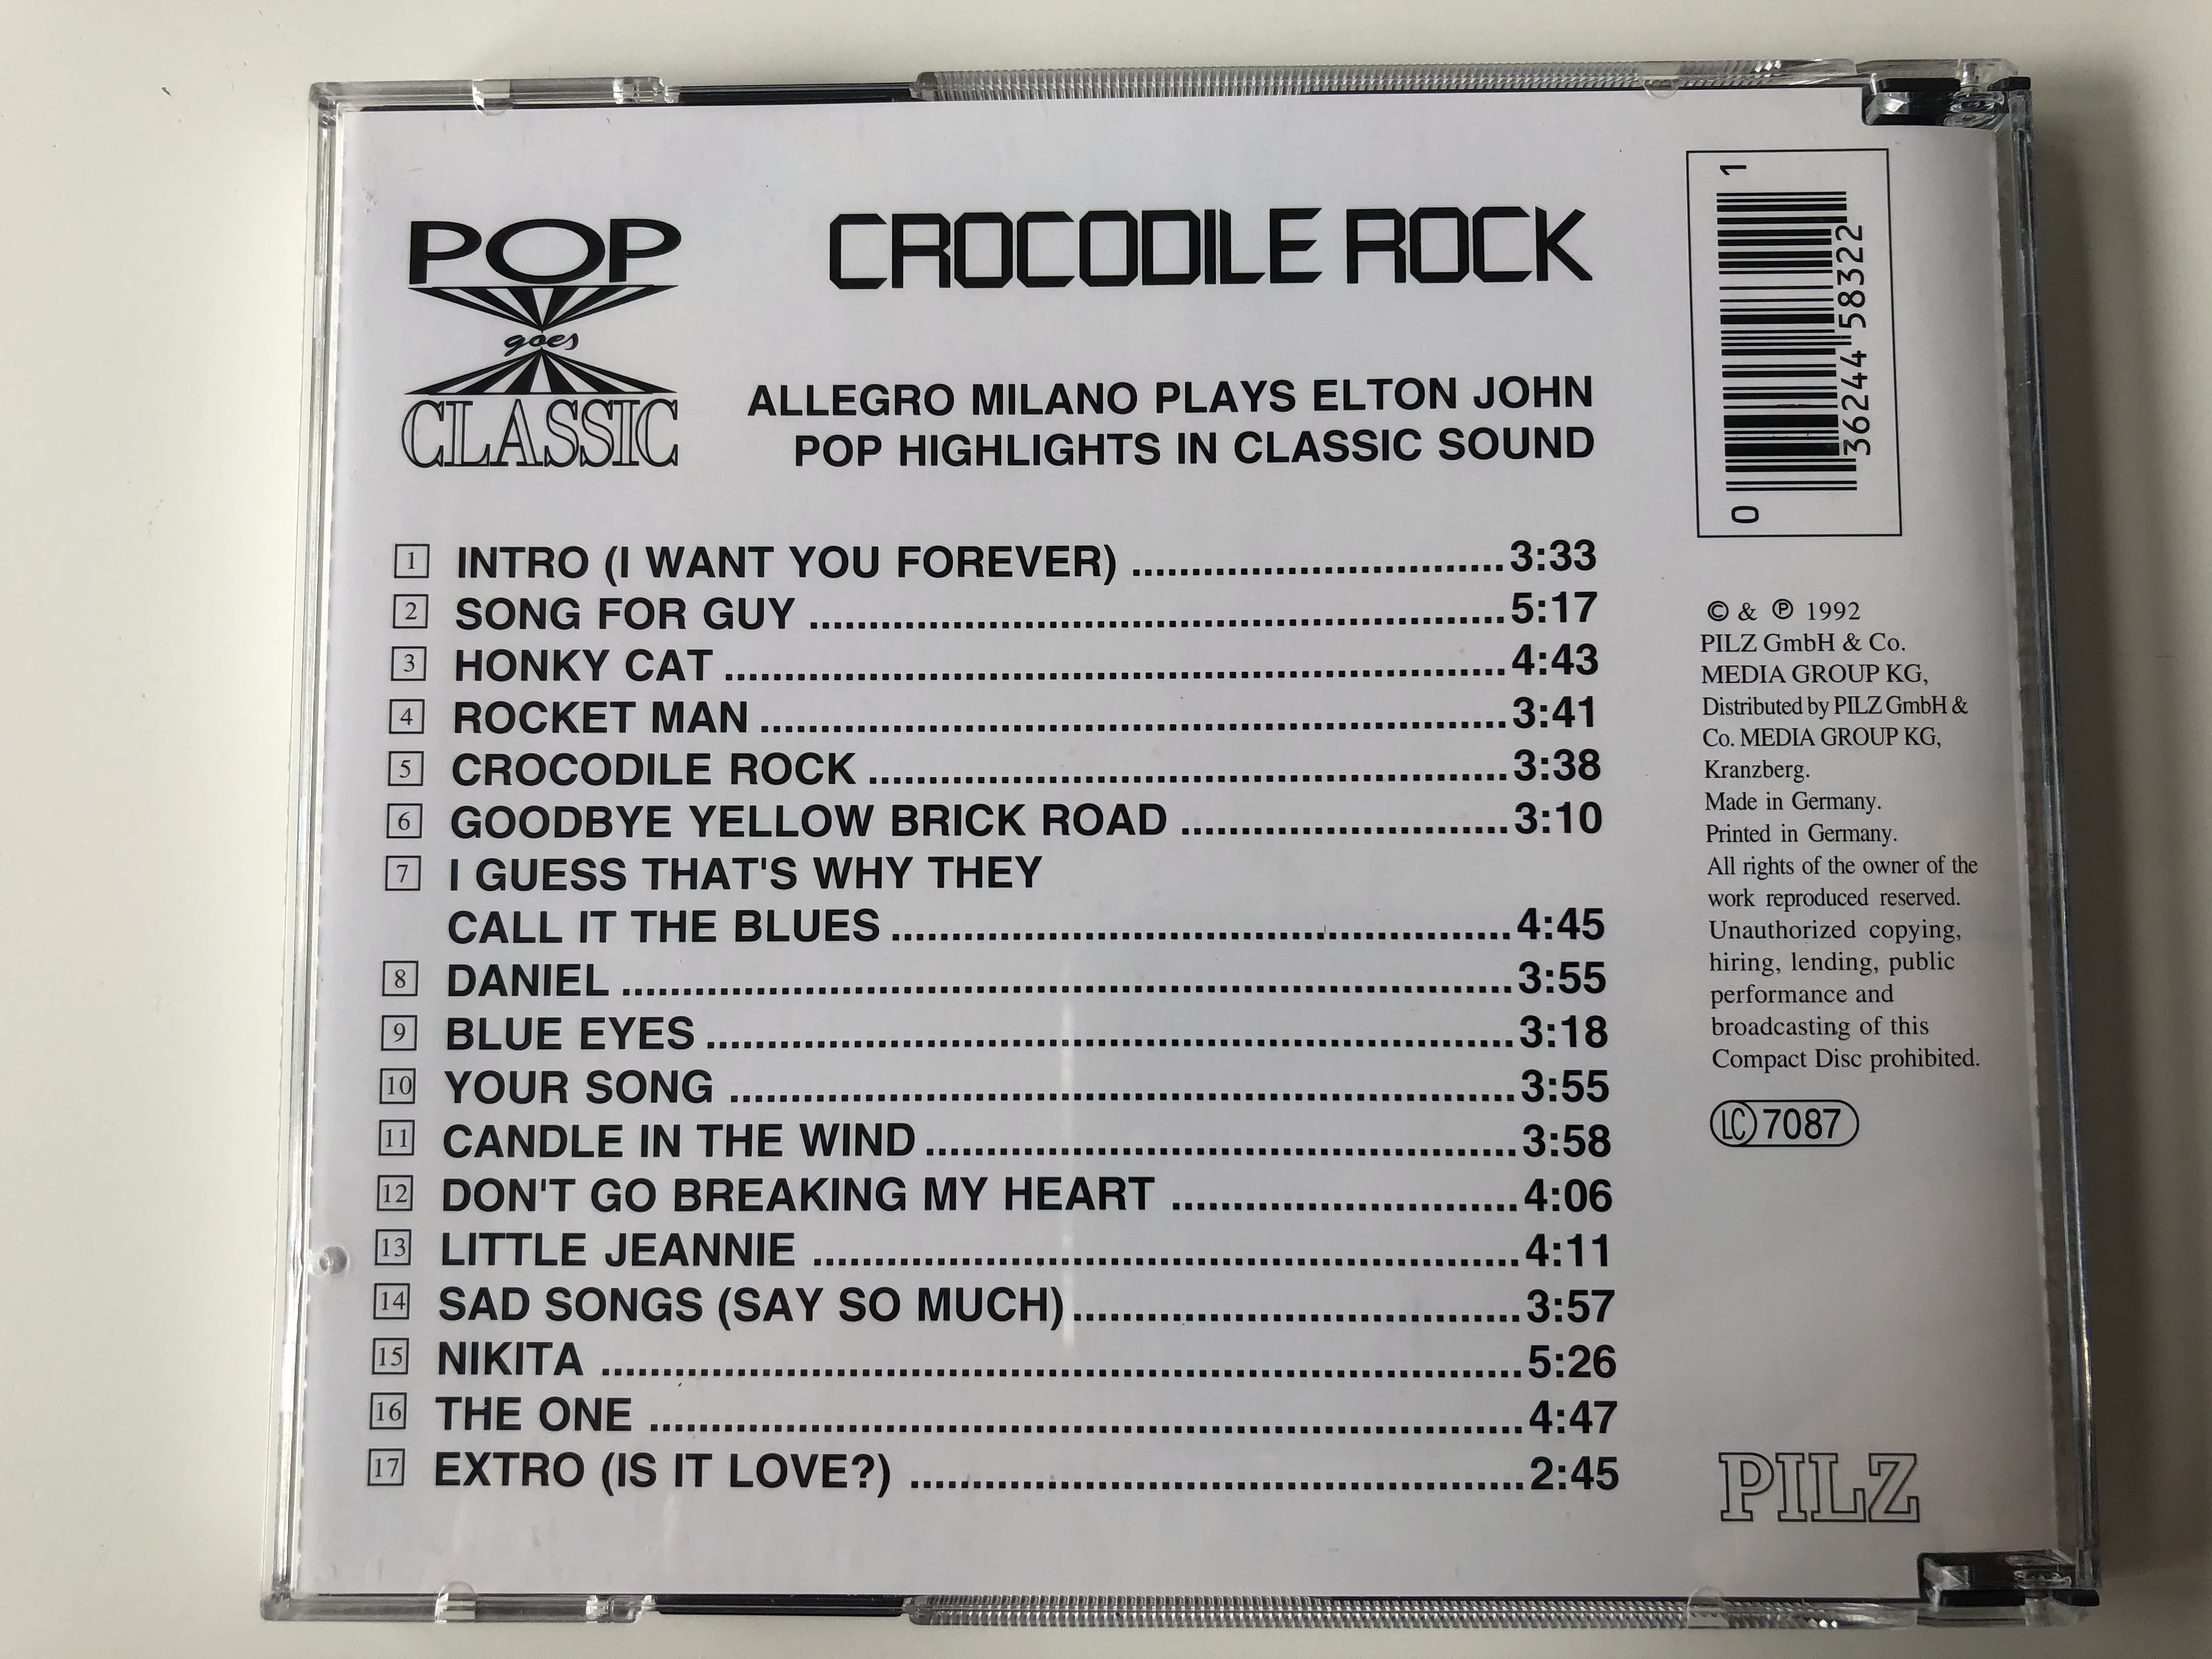 crocodile-rock-allegro-milano-plays-elton-john-pop-goes-classic-pilz-audio-cd-1992-stereo-44-5832-2-4-.jpg